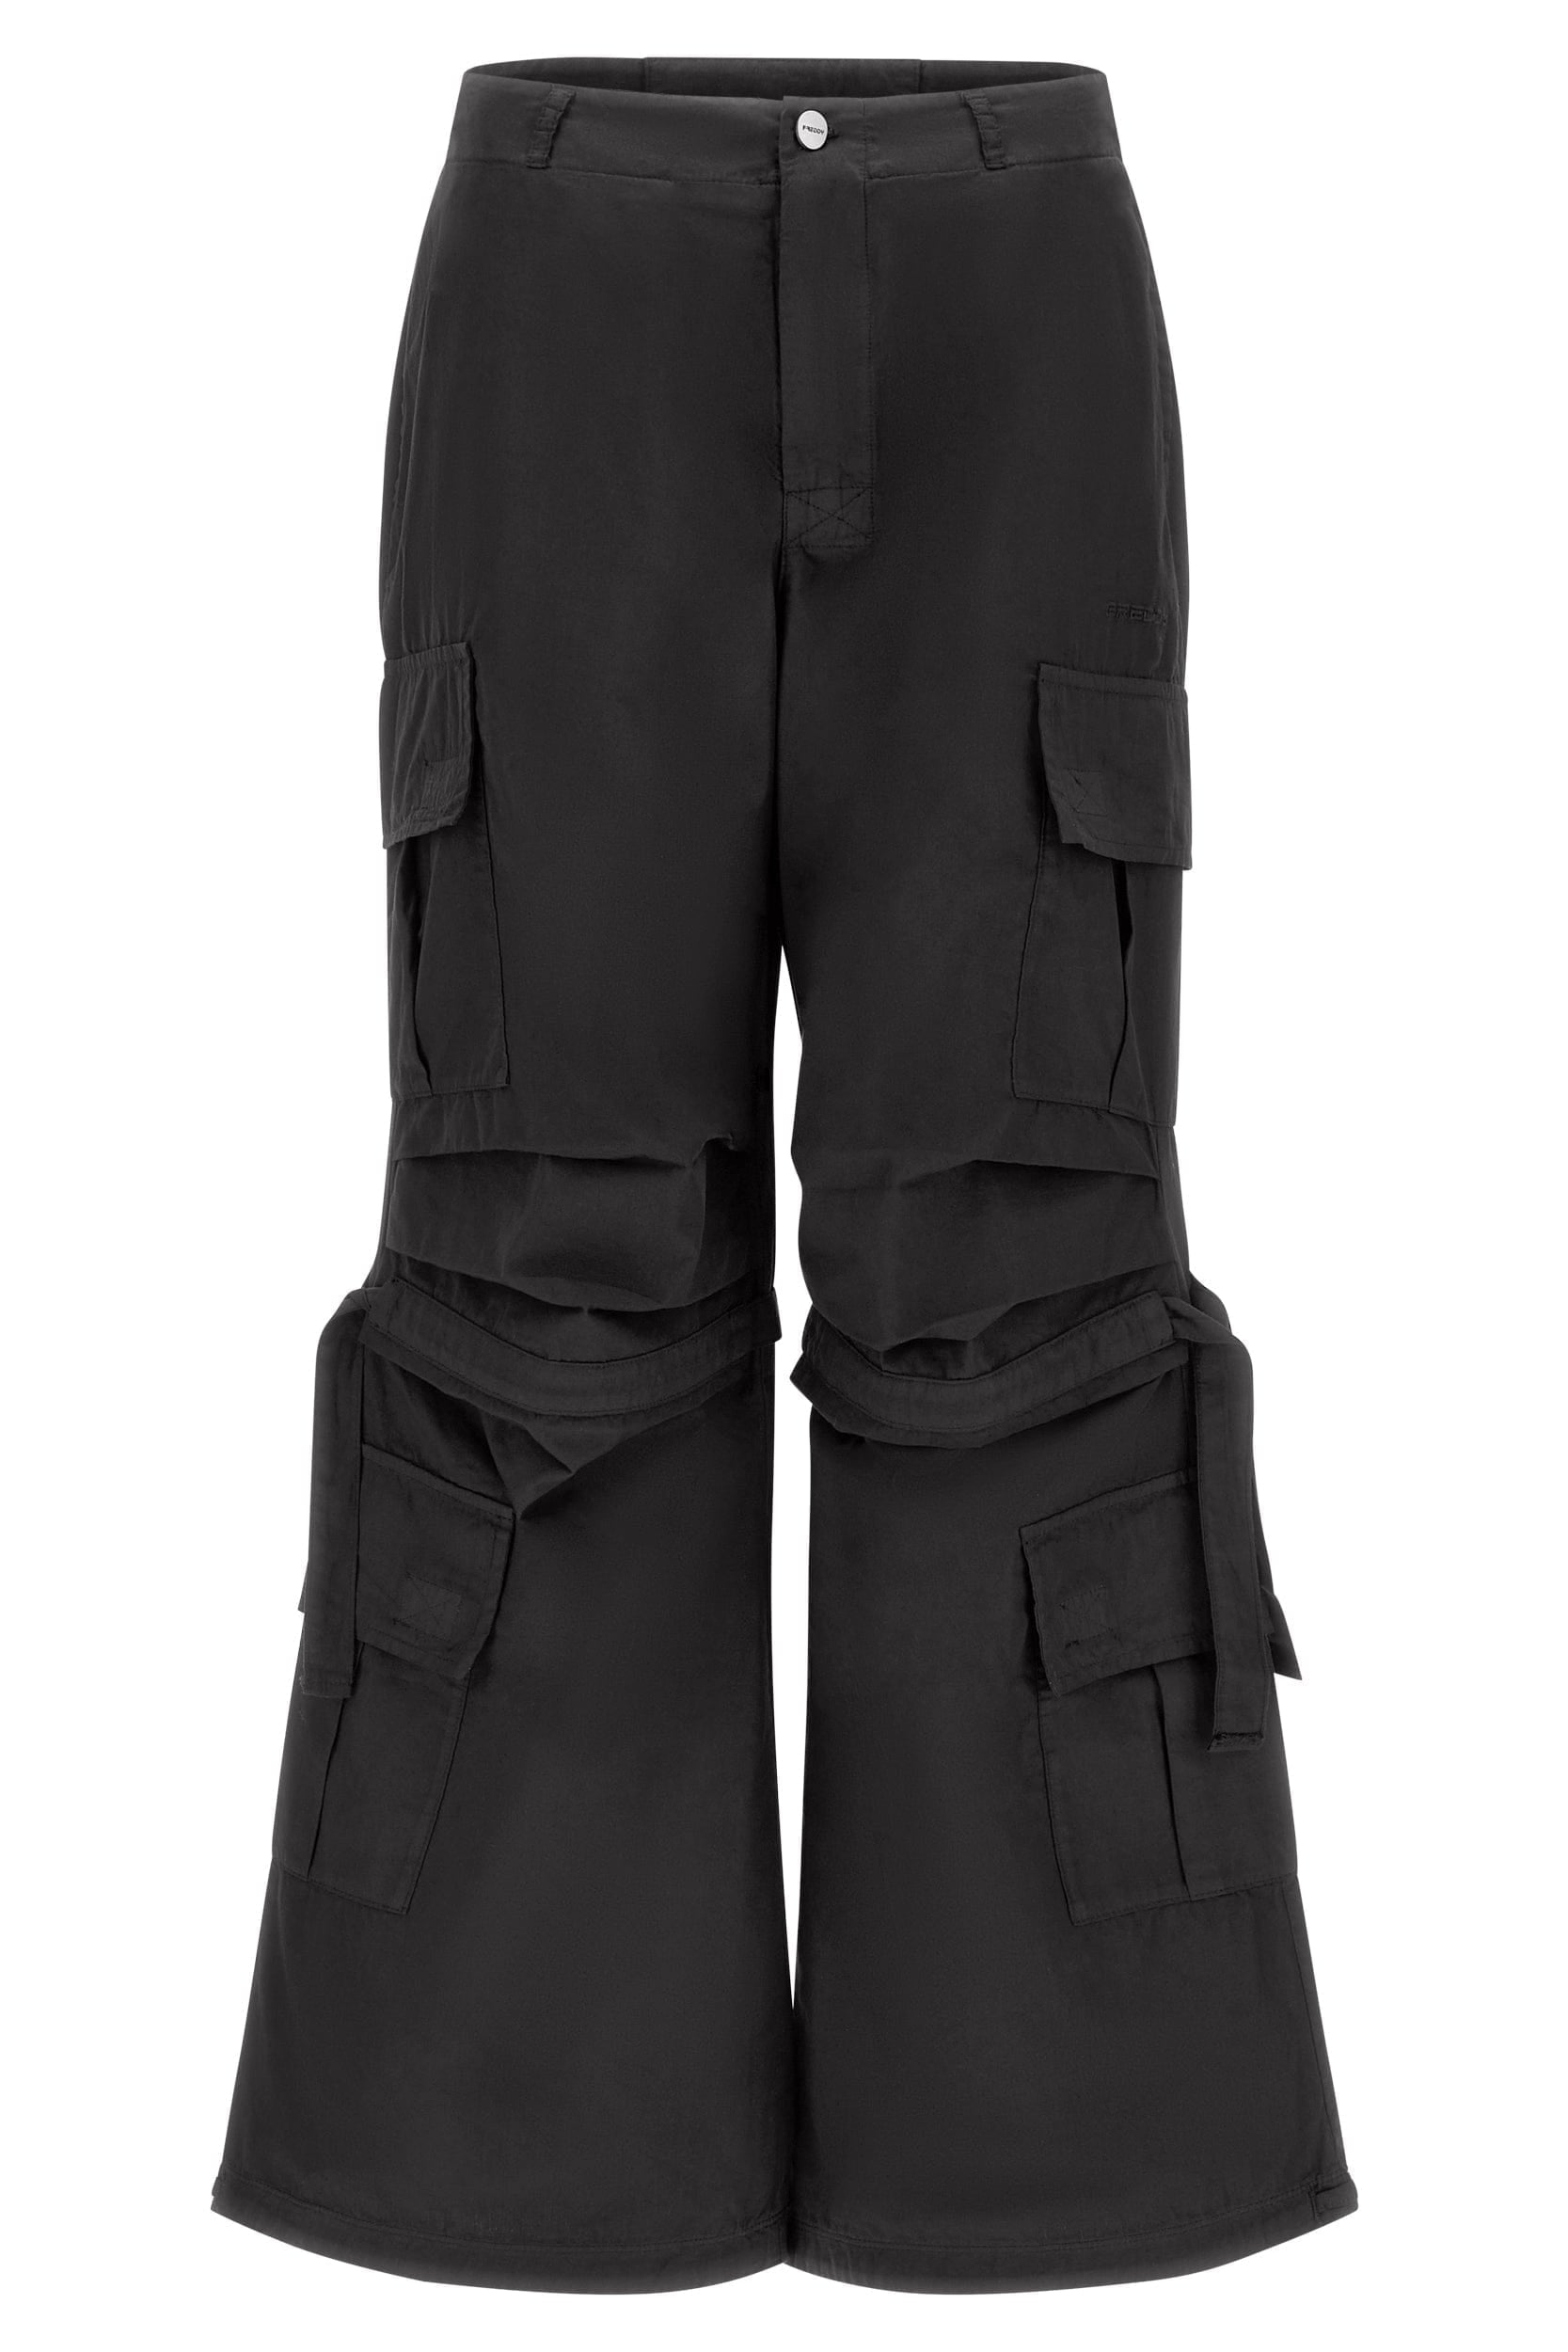 Pantalones cargo - Talle alto - Largo completo - Negro 8